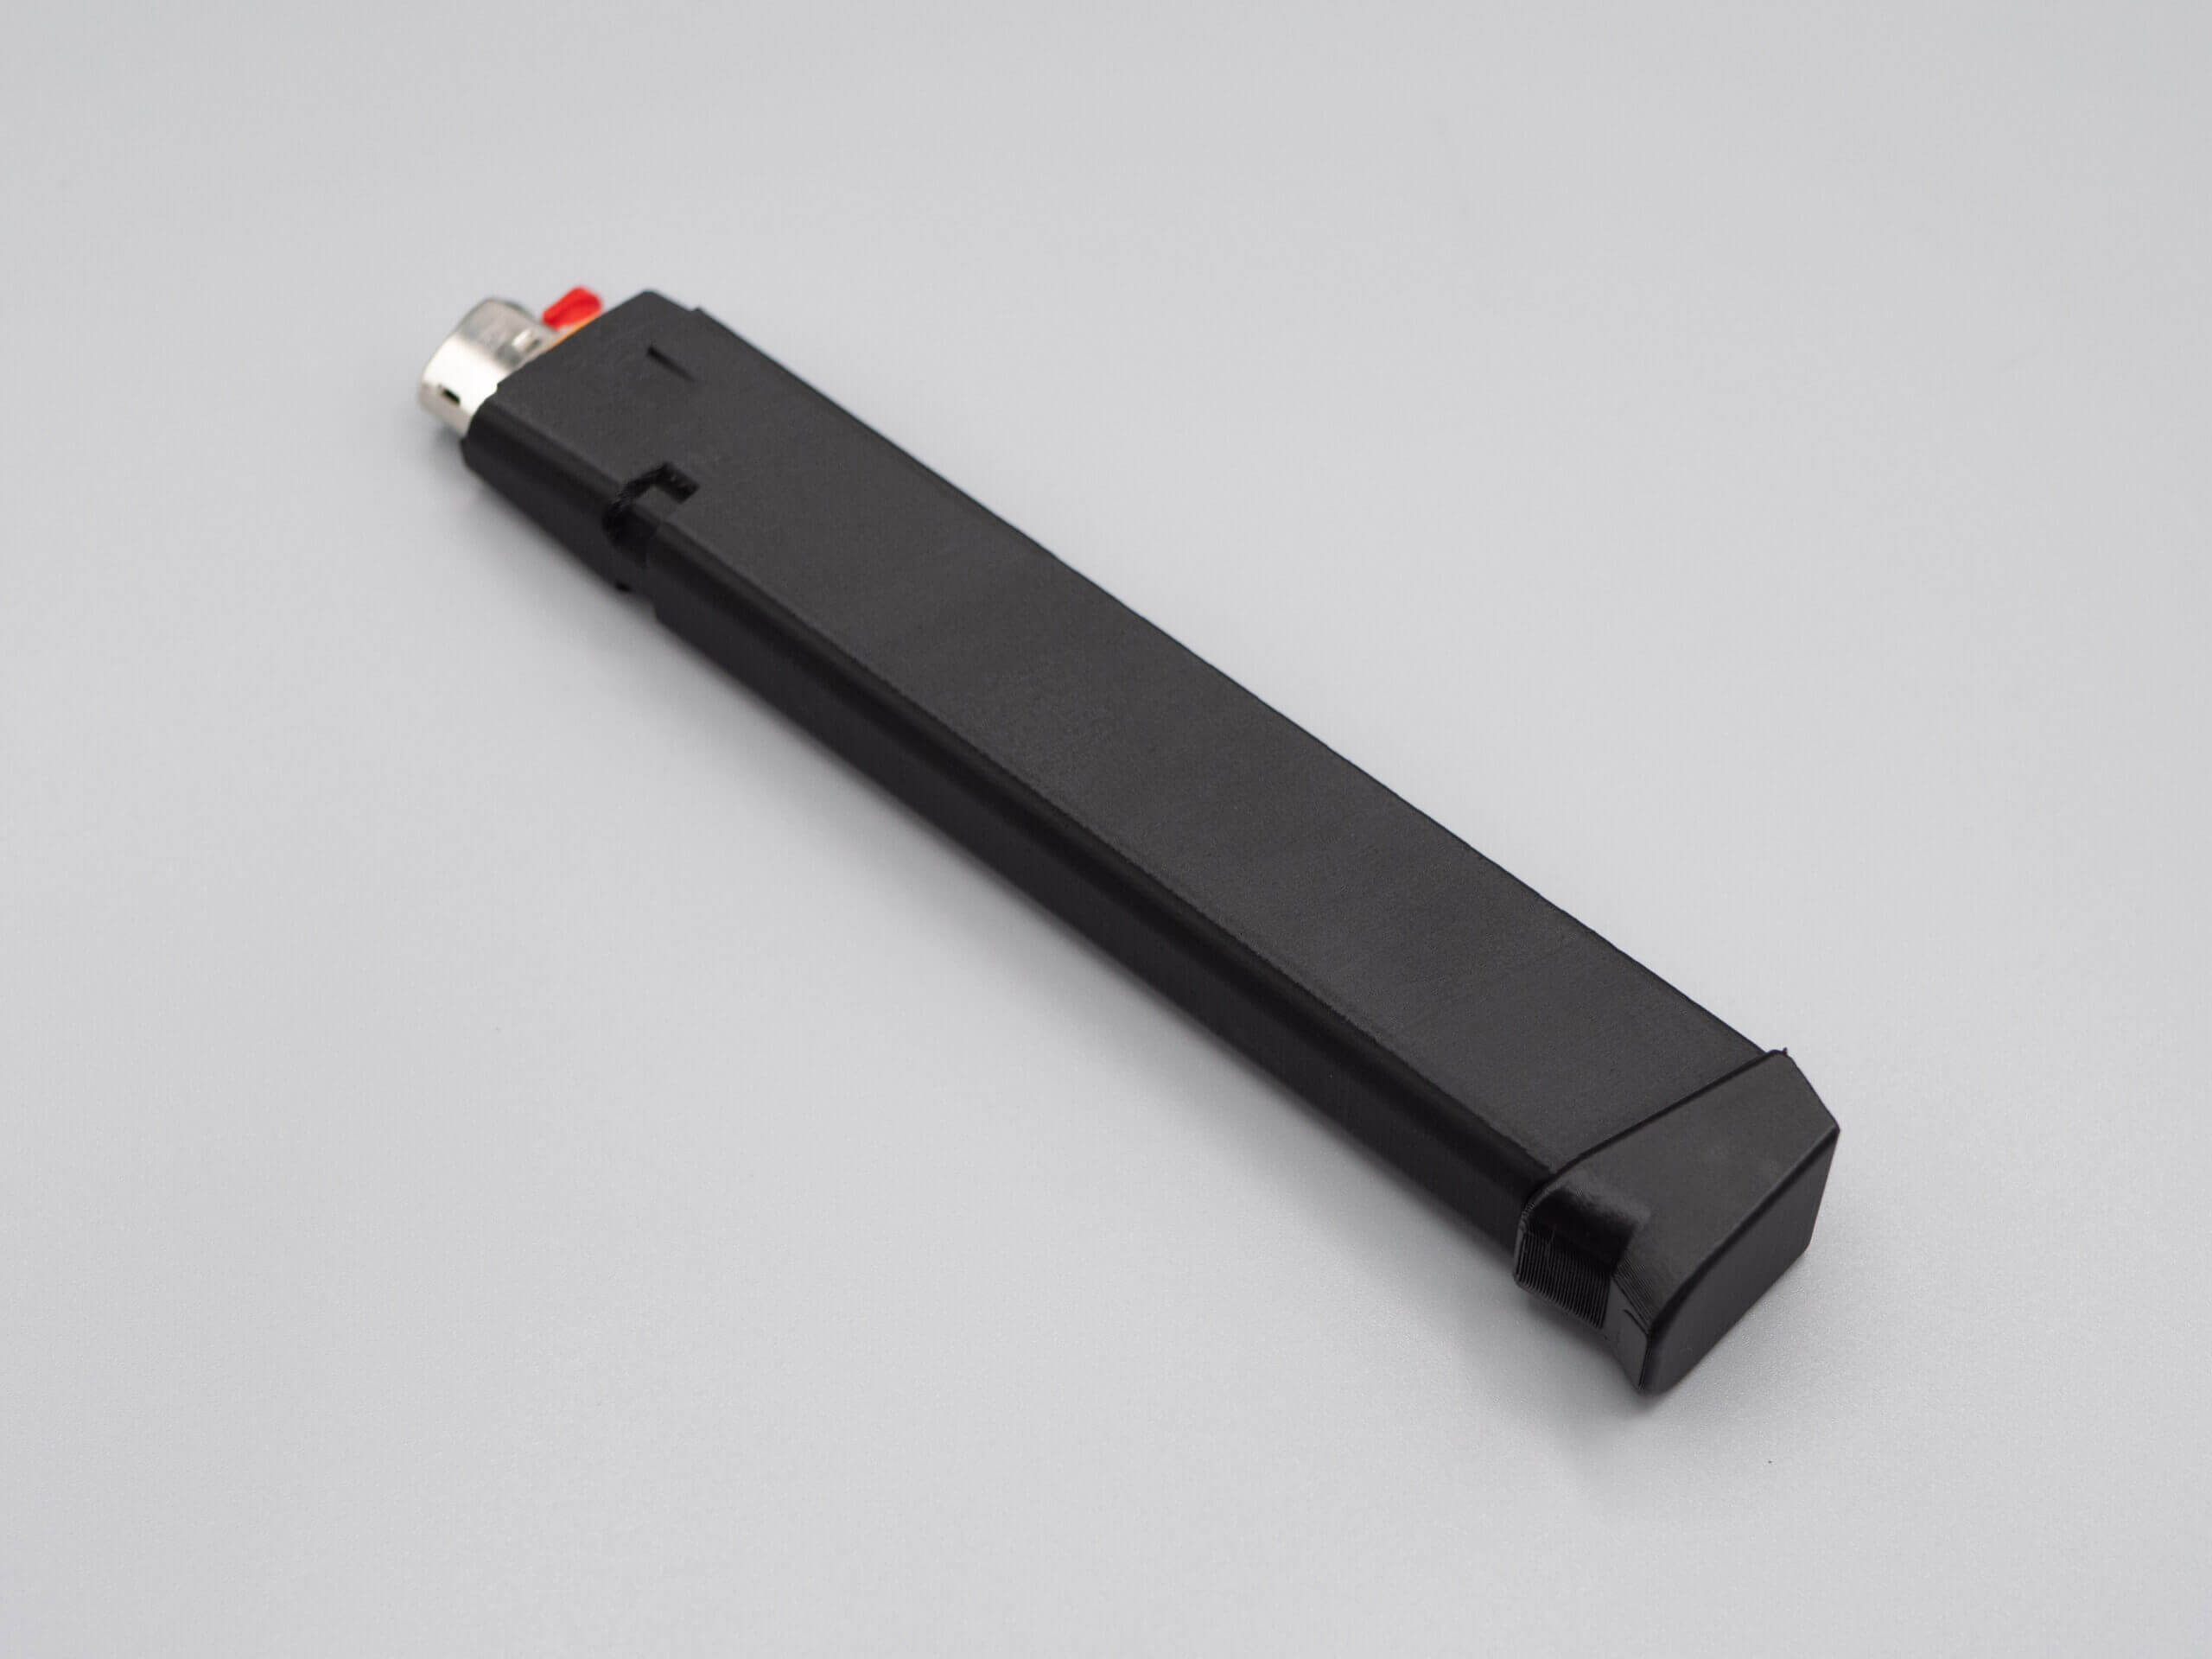 EXTENDO V2 - BIC MINI SIZE - Extended Magazine Lighter + Stash Case - 48 COLORS